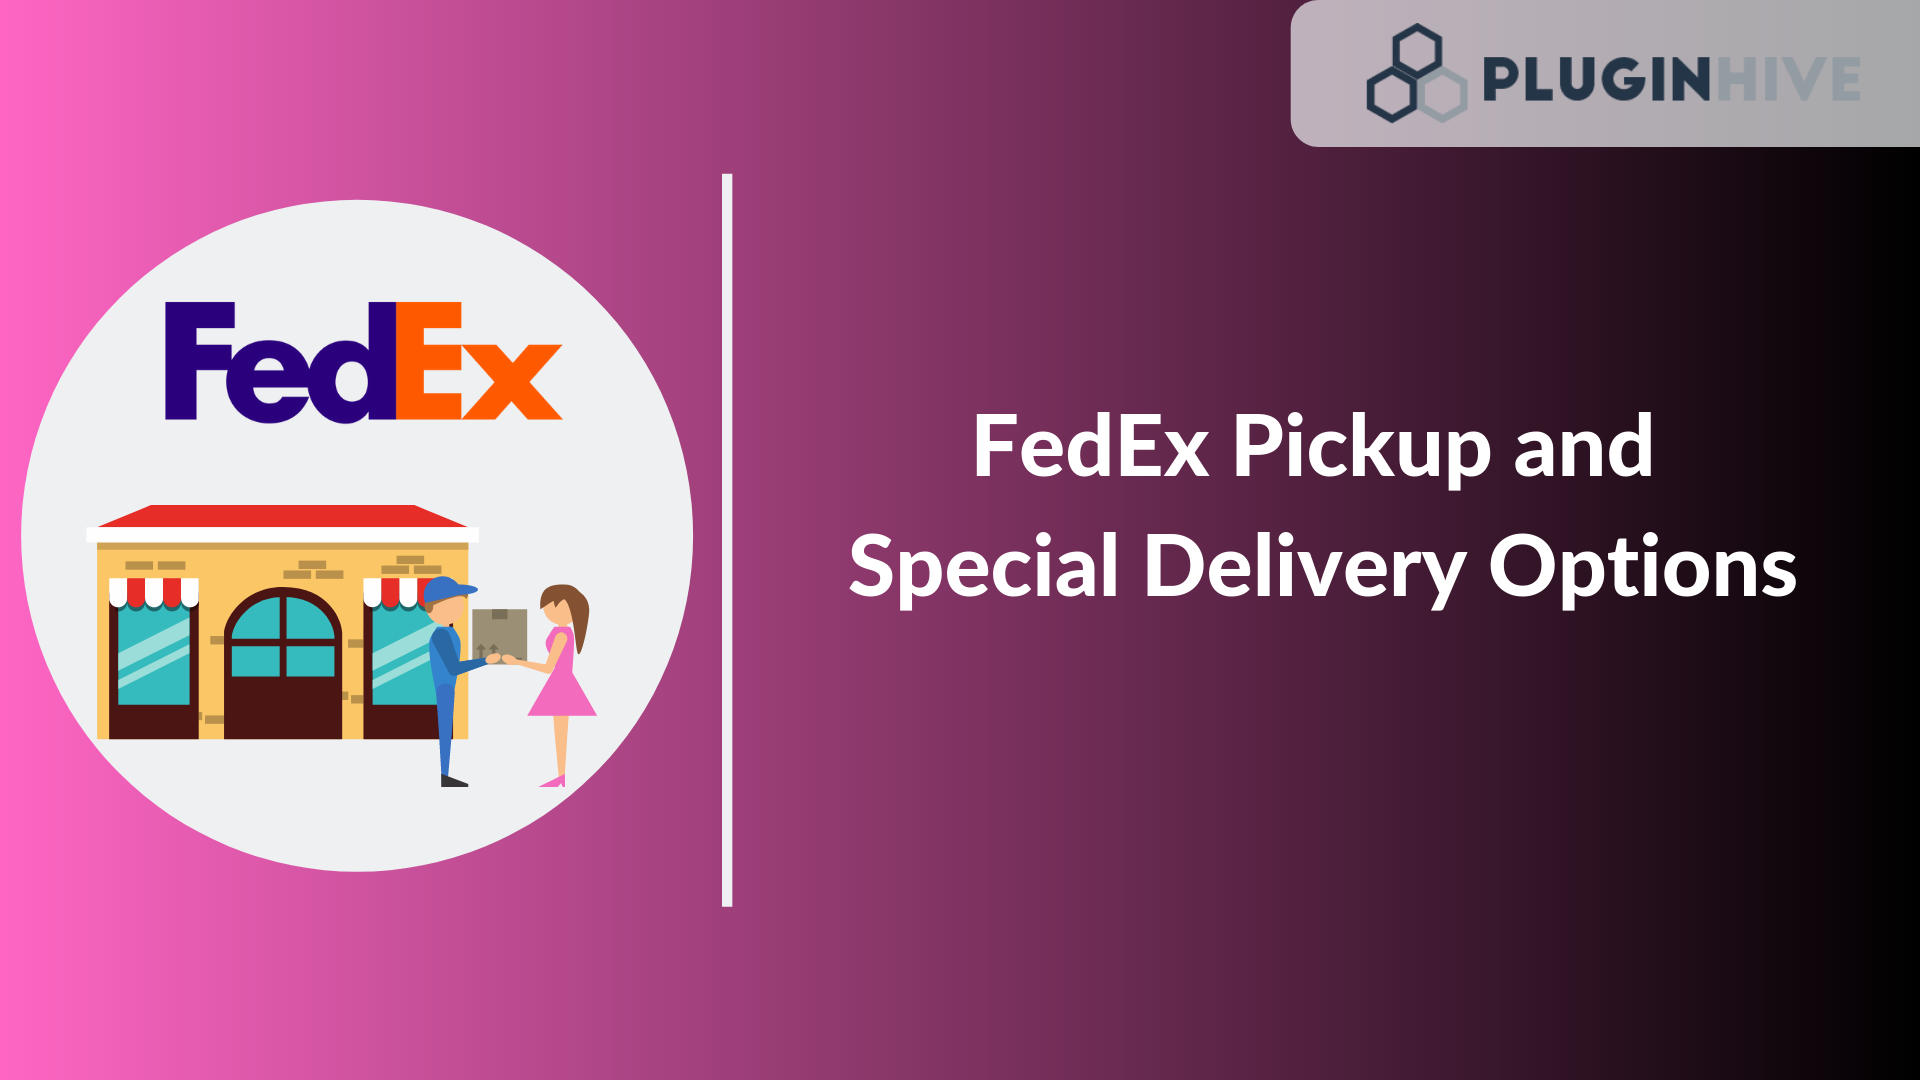 arrange fedex pickup by phone